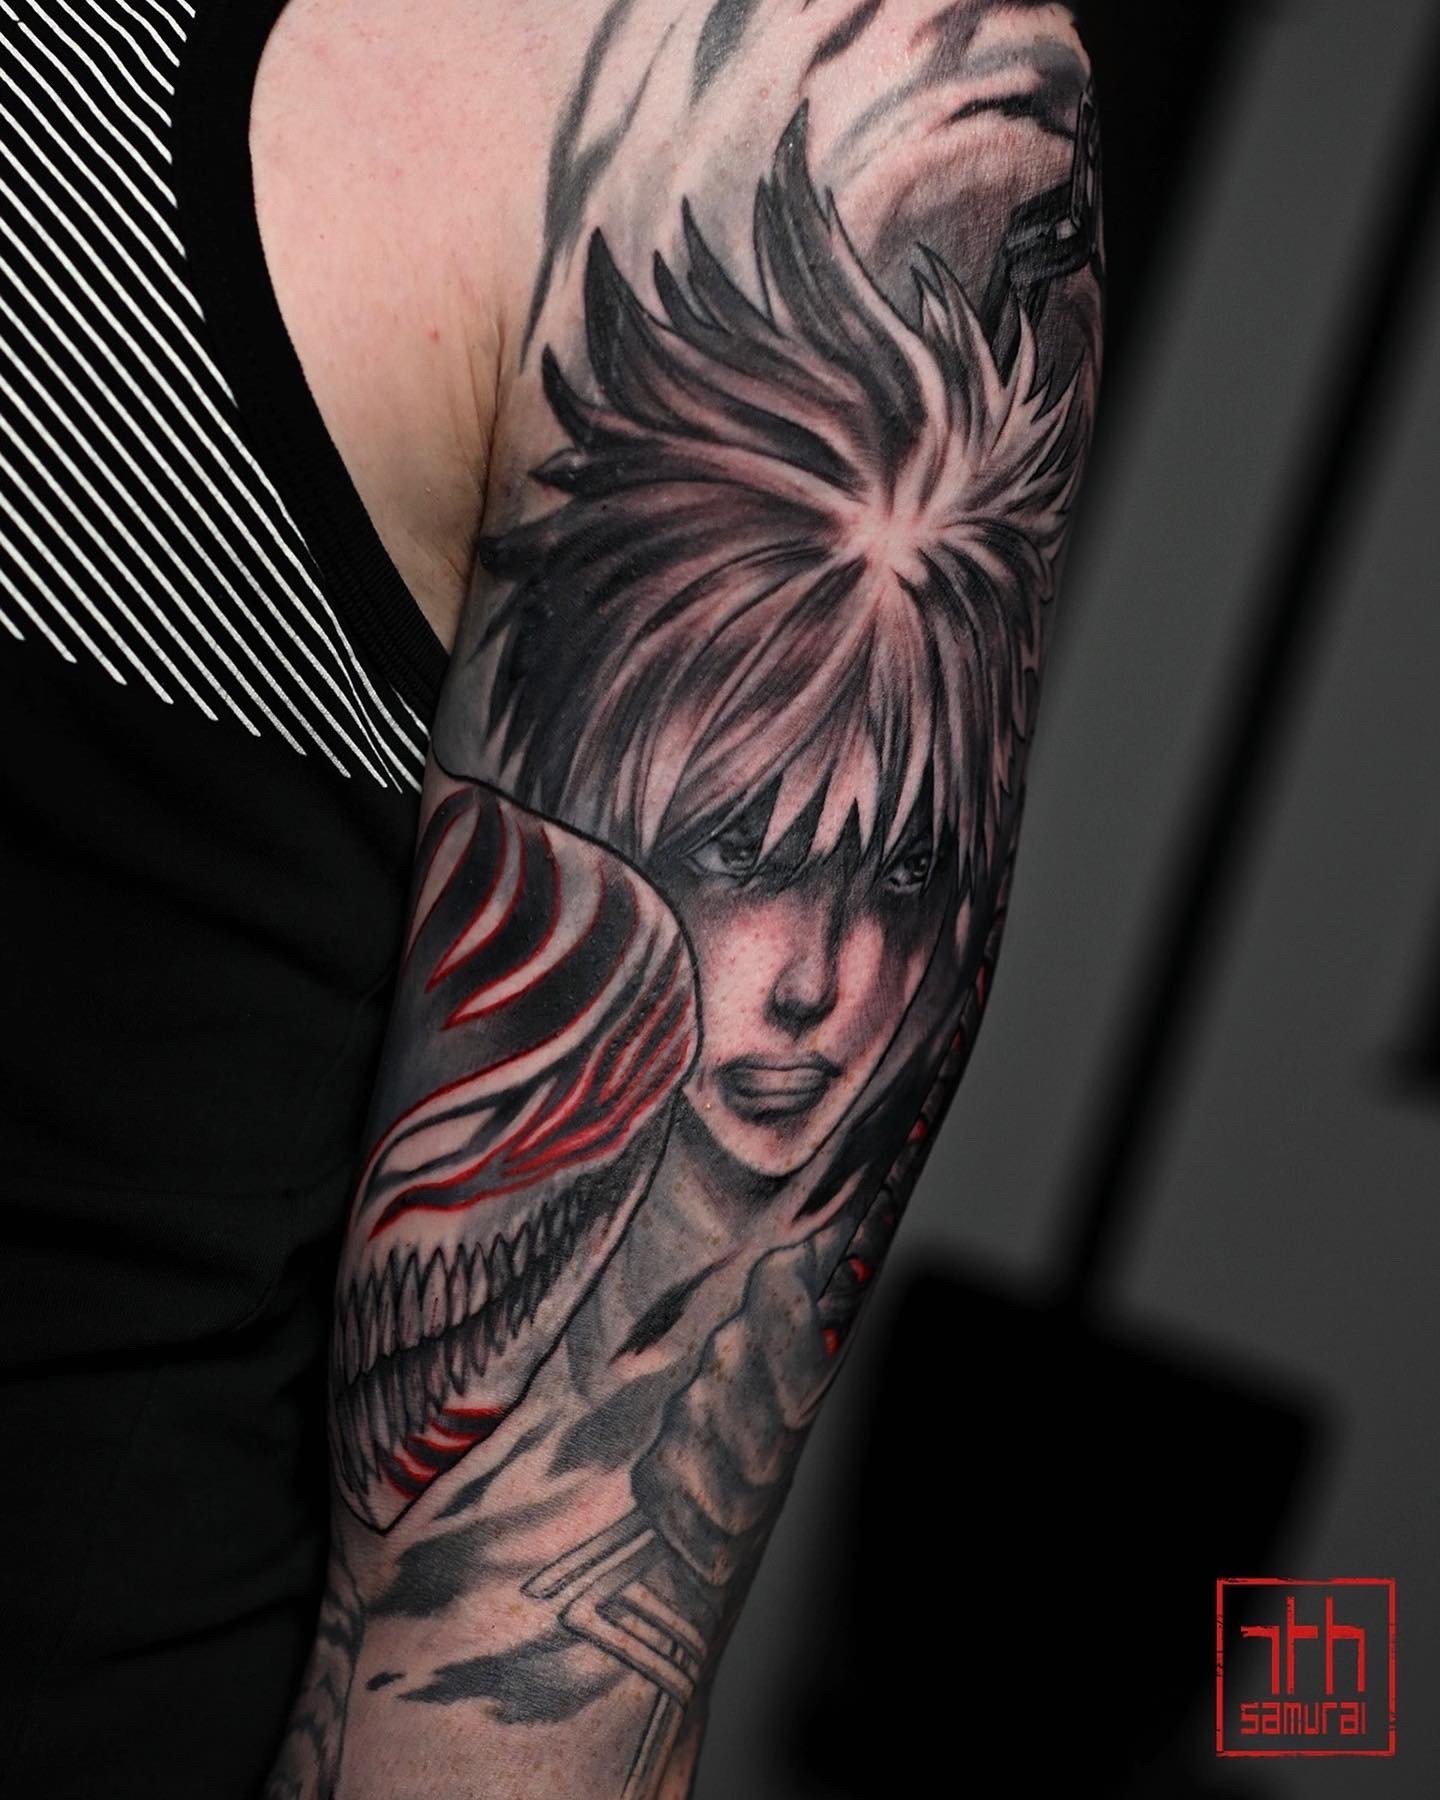 Ichigo Kurosaki   Men's Bleach anime manga tattoo with red highlights   asian artist: Kai 7th Samurai. YEG Edmonton, Alberta, Canada 2023 best 2024 